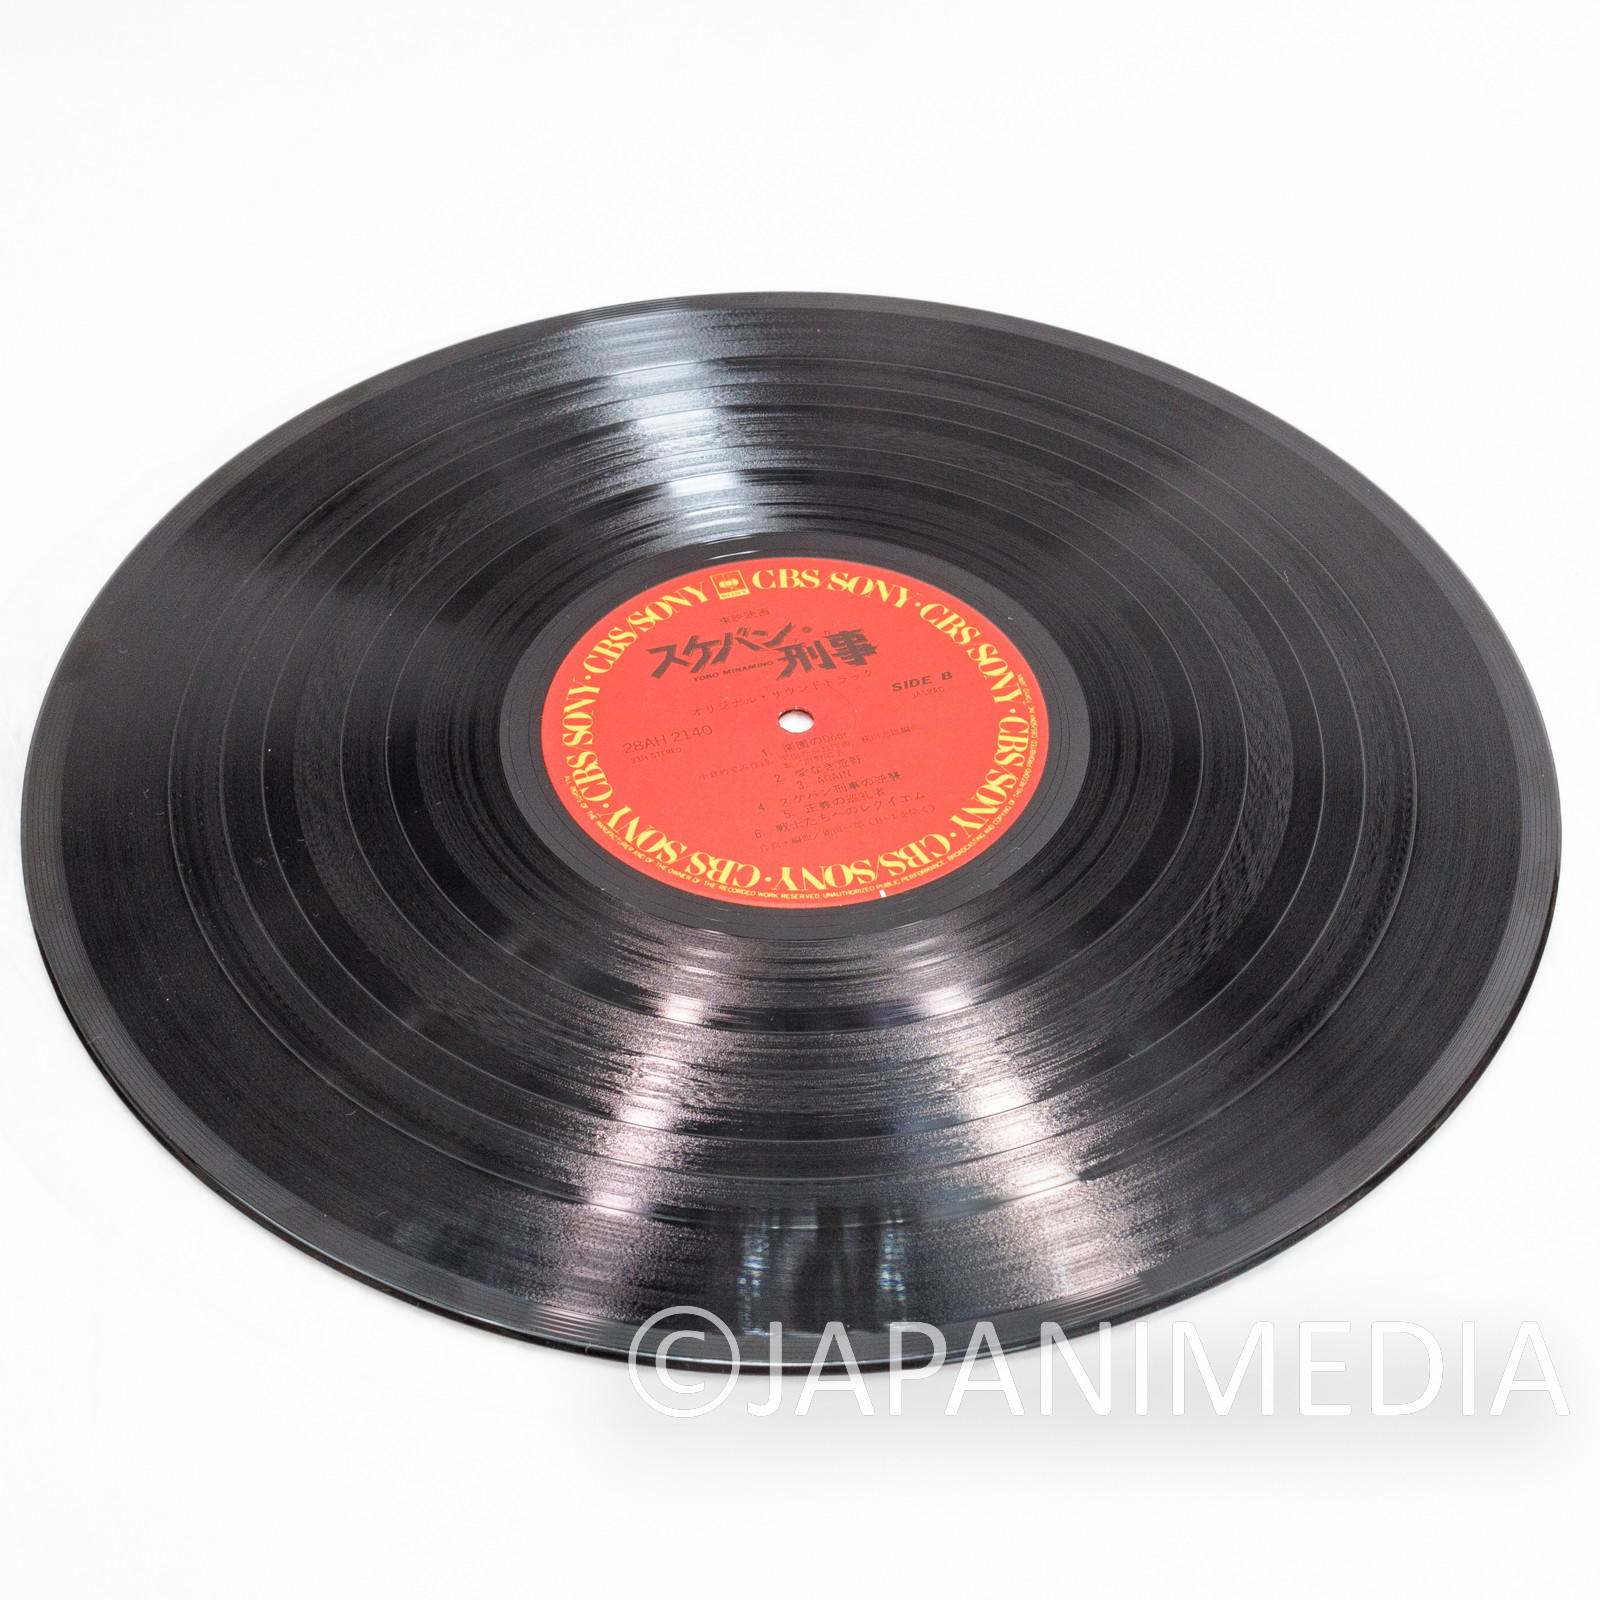 Sukeban Deka Movie Soundtrack 12" Vinyl LP Record 28AH-2140 / YOKO MINAMINO